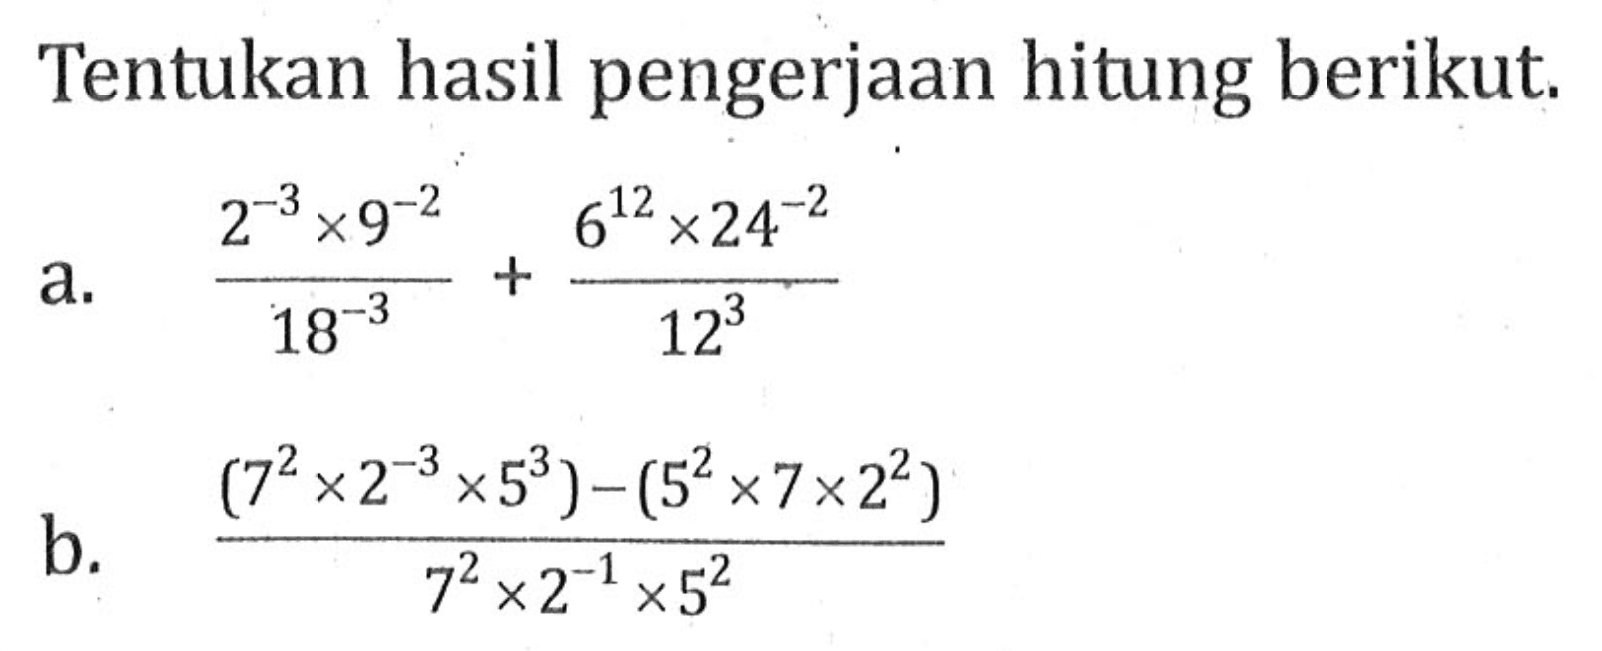 Tentukan hasil pengerjaan hitung berikut. a. (2^(-3)x9^(-2))/(18^(-3))+(6^(12)x24^(-2))/(12^3) b. ((7^2x2^(-3)x5^3)-(5^2x7x2^2))/(7^2x2^(-1)x5^2)